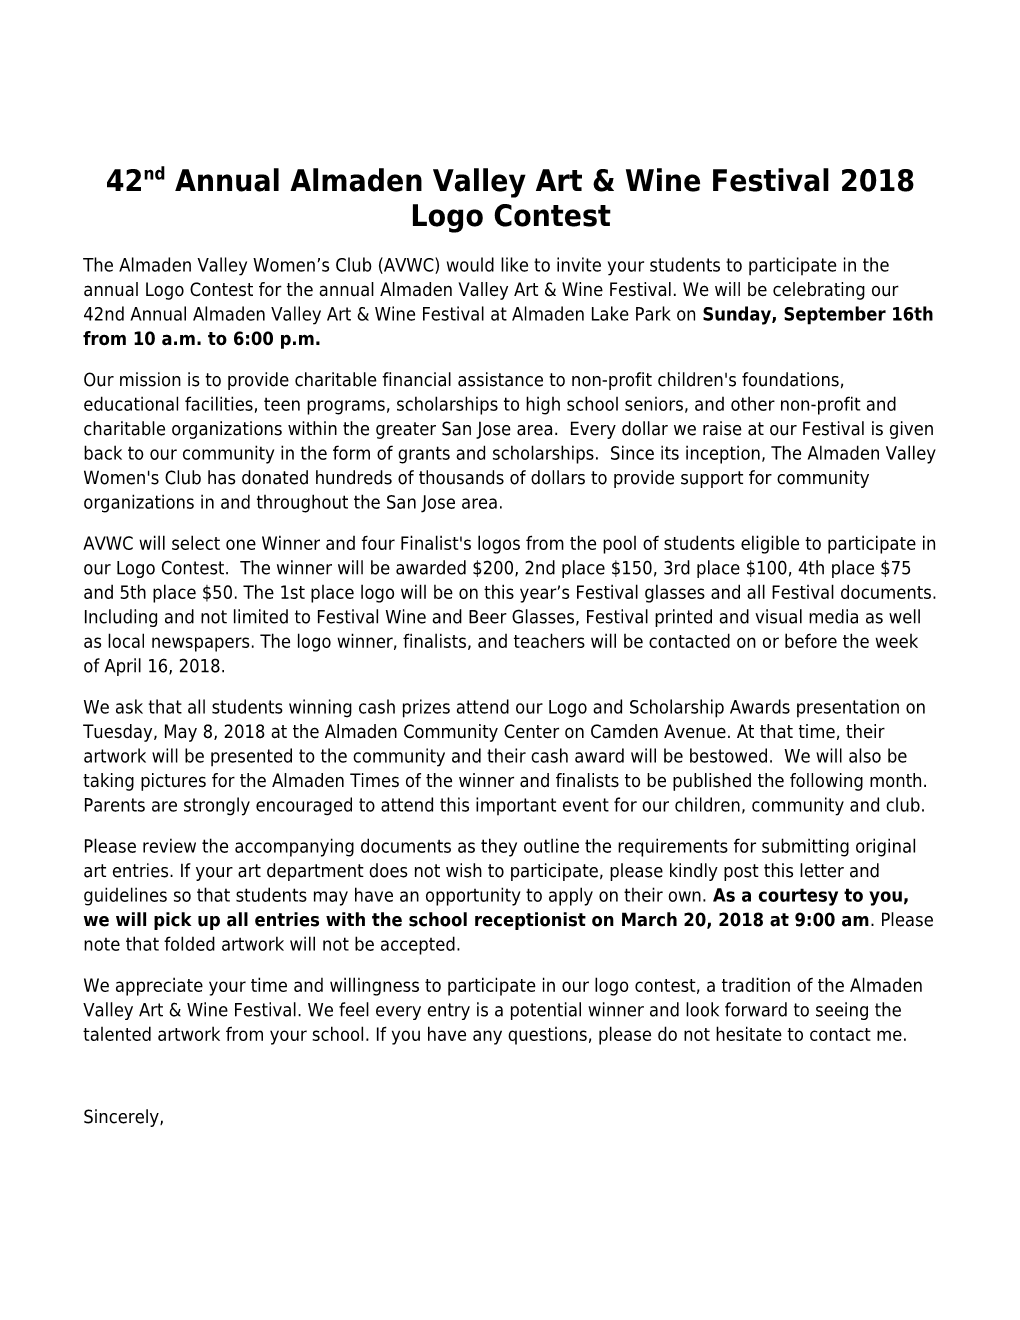 42Nd Annual Almaden Valley Art & Wine Festival 2018 Logo Contest